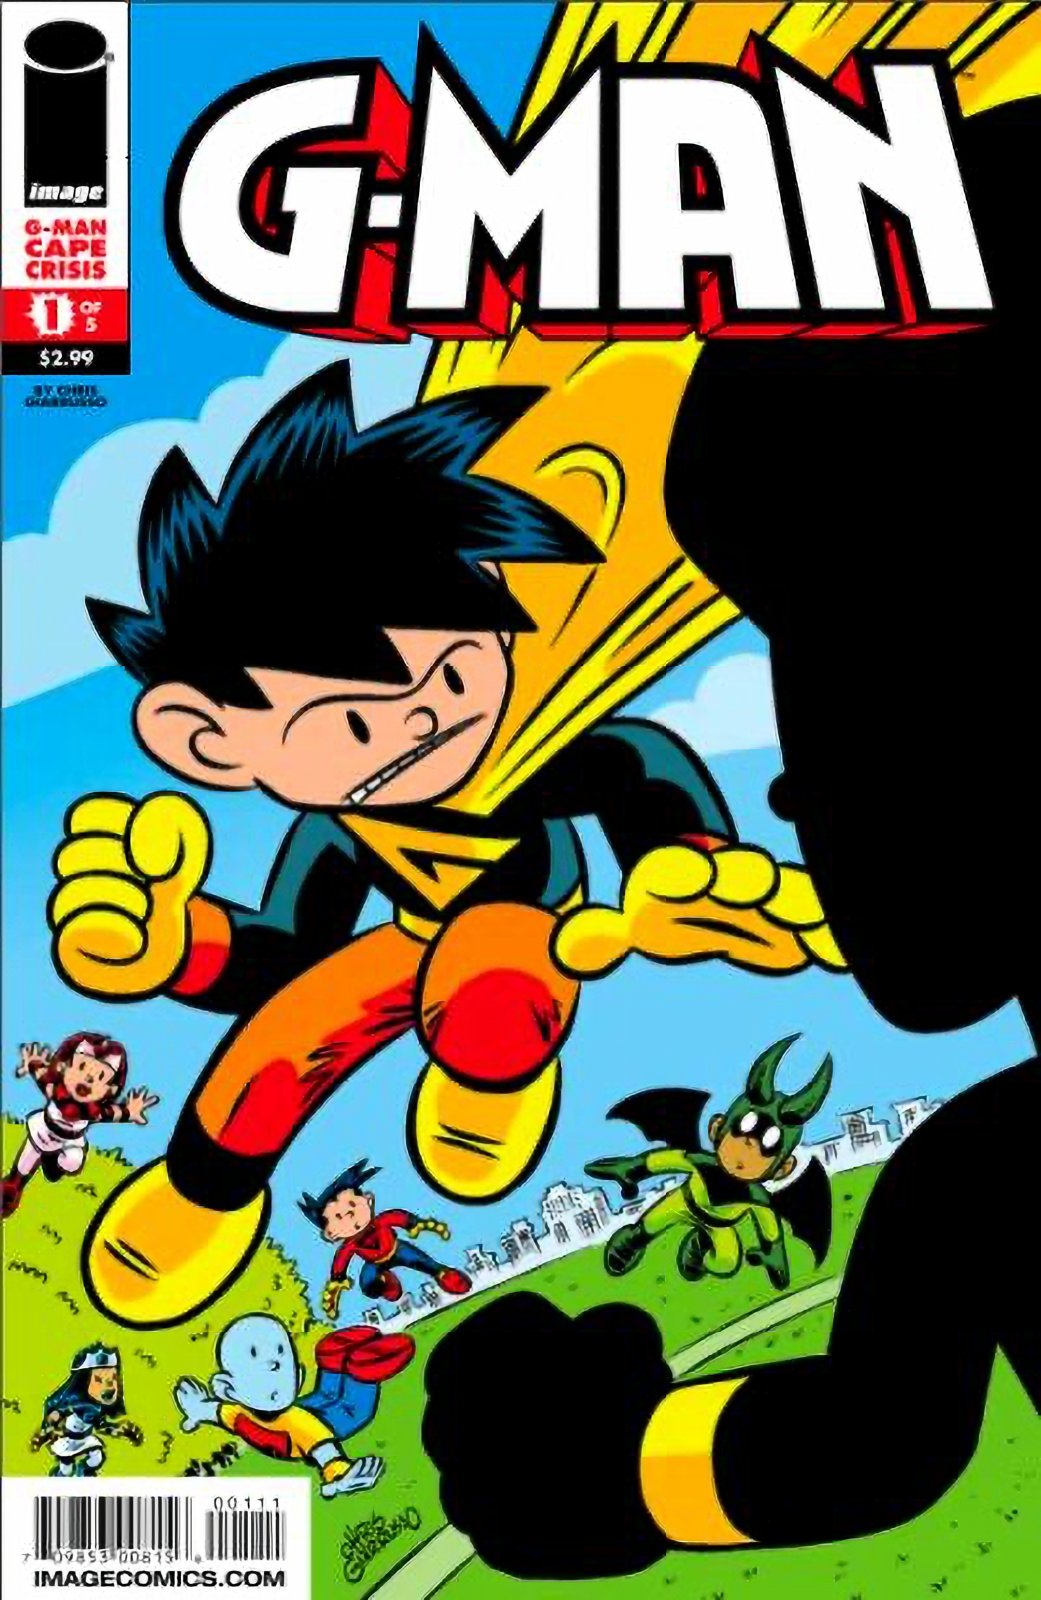 G-Man: Cape Crisis #1 (2009-2010) Image Comics